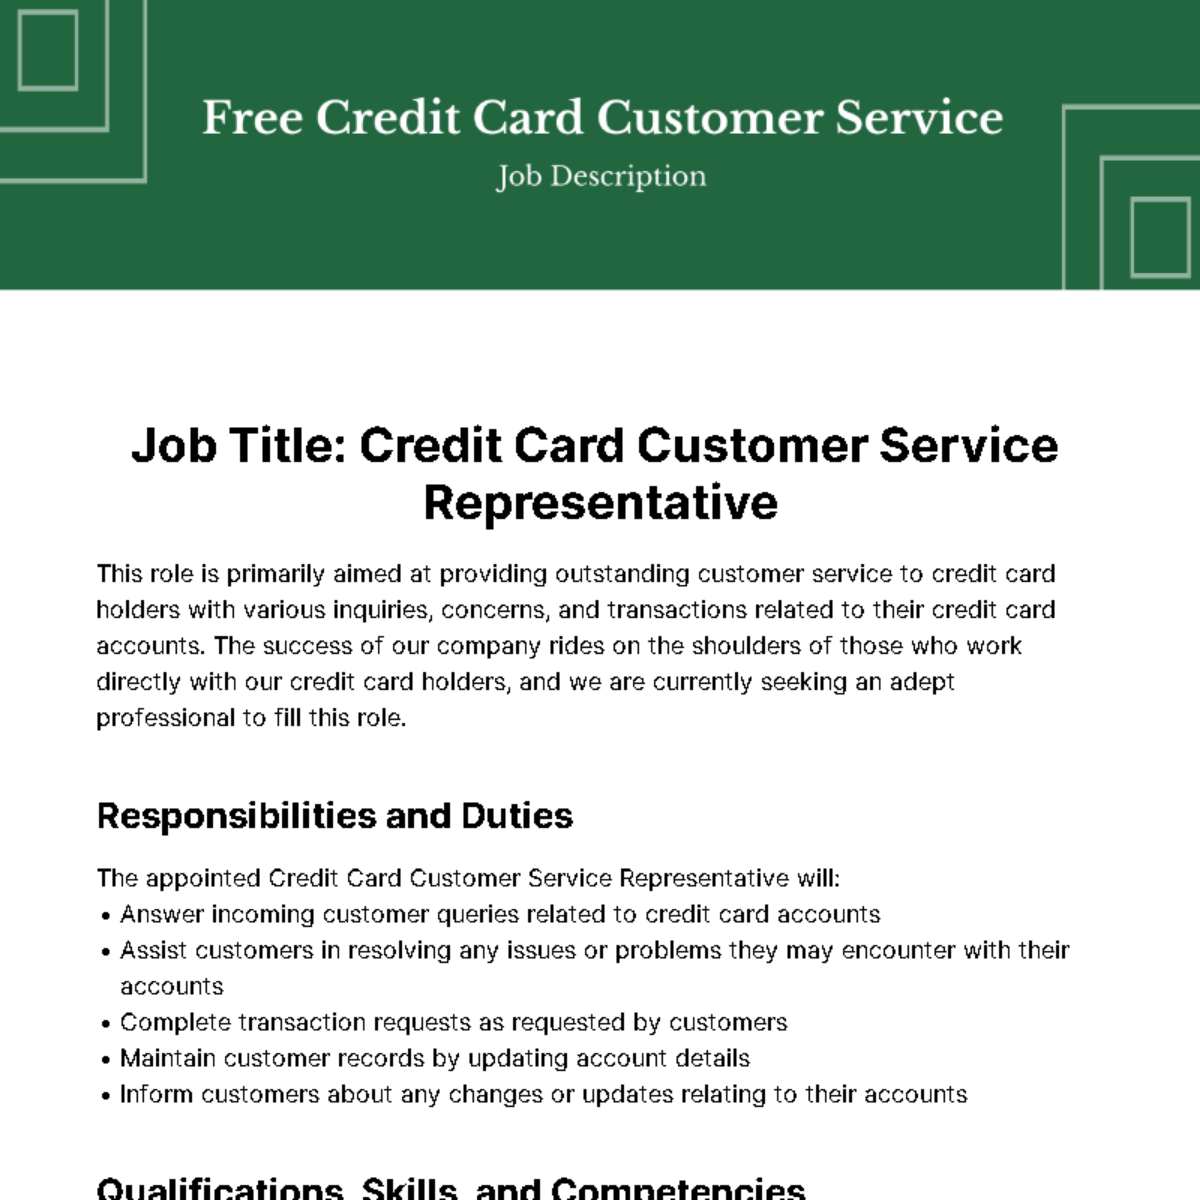 Free Credit Card Customer Service Job Description Template